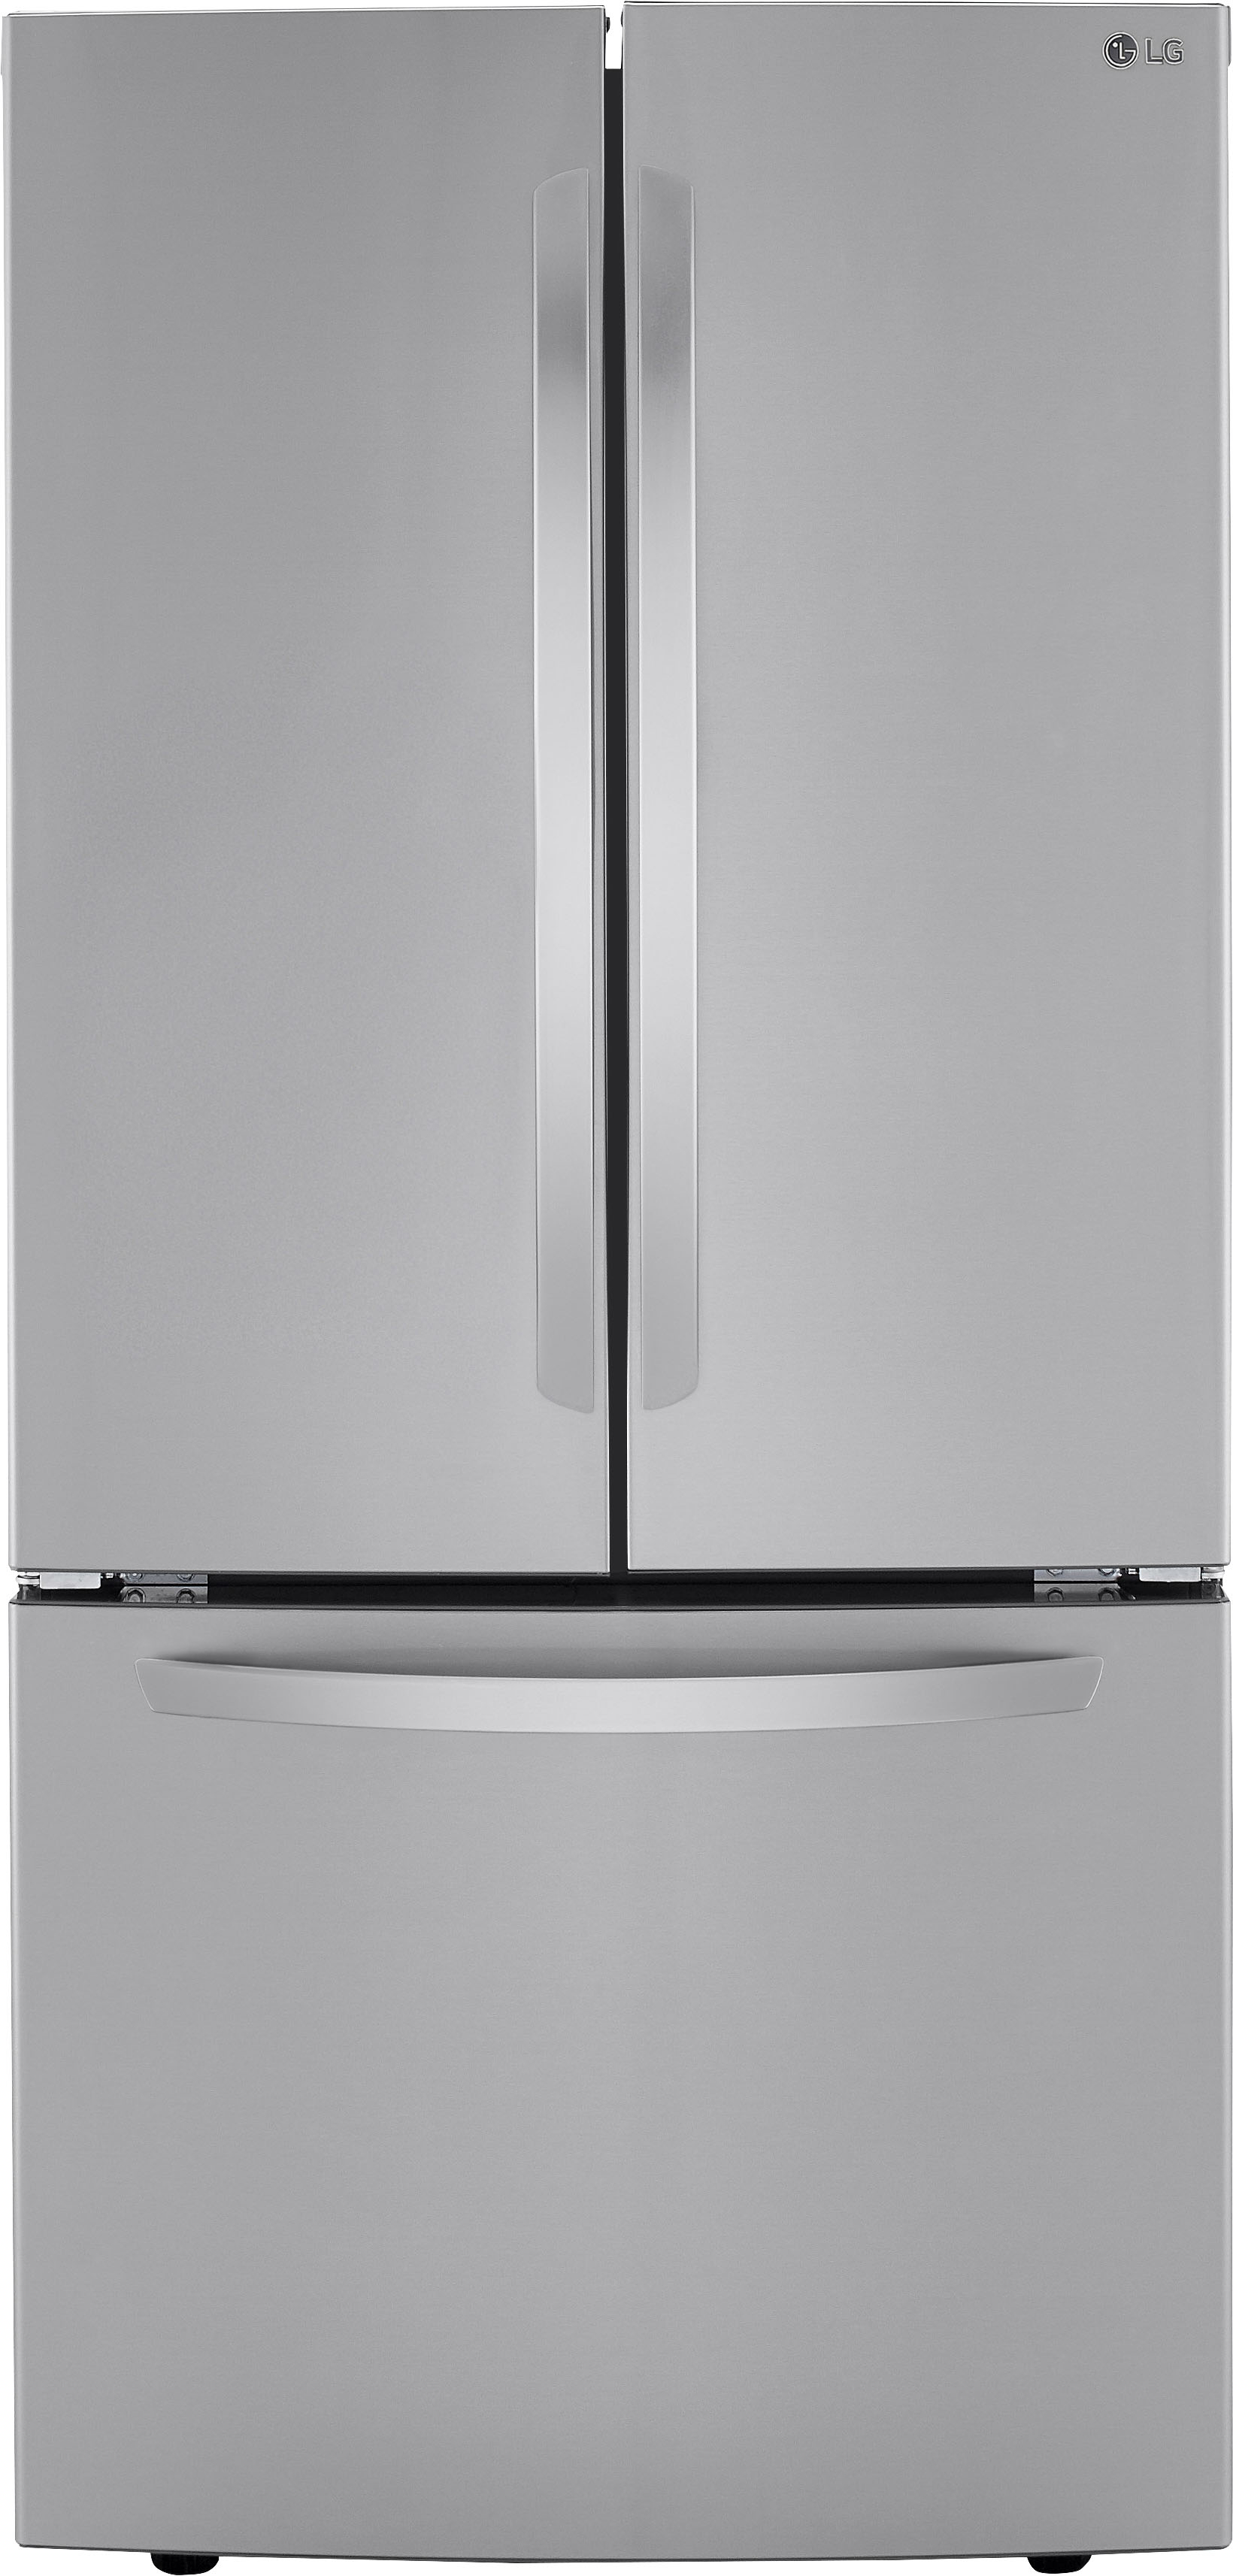 LG Home Appliances, Refrigerators